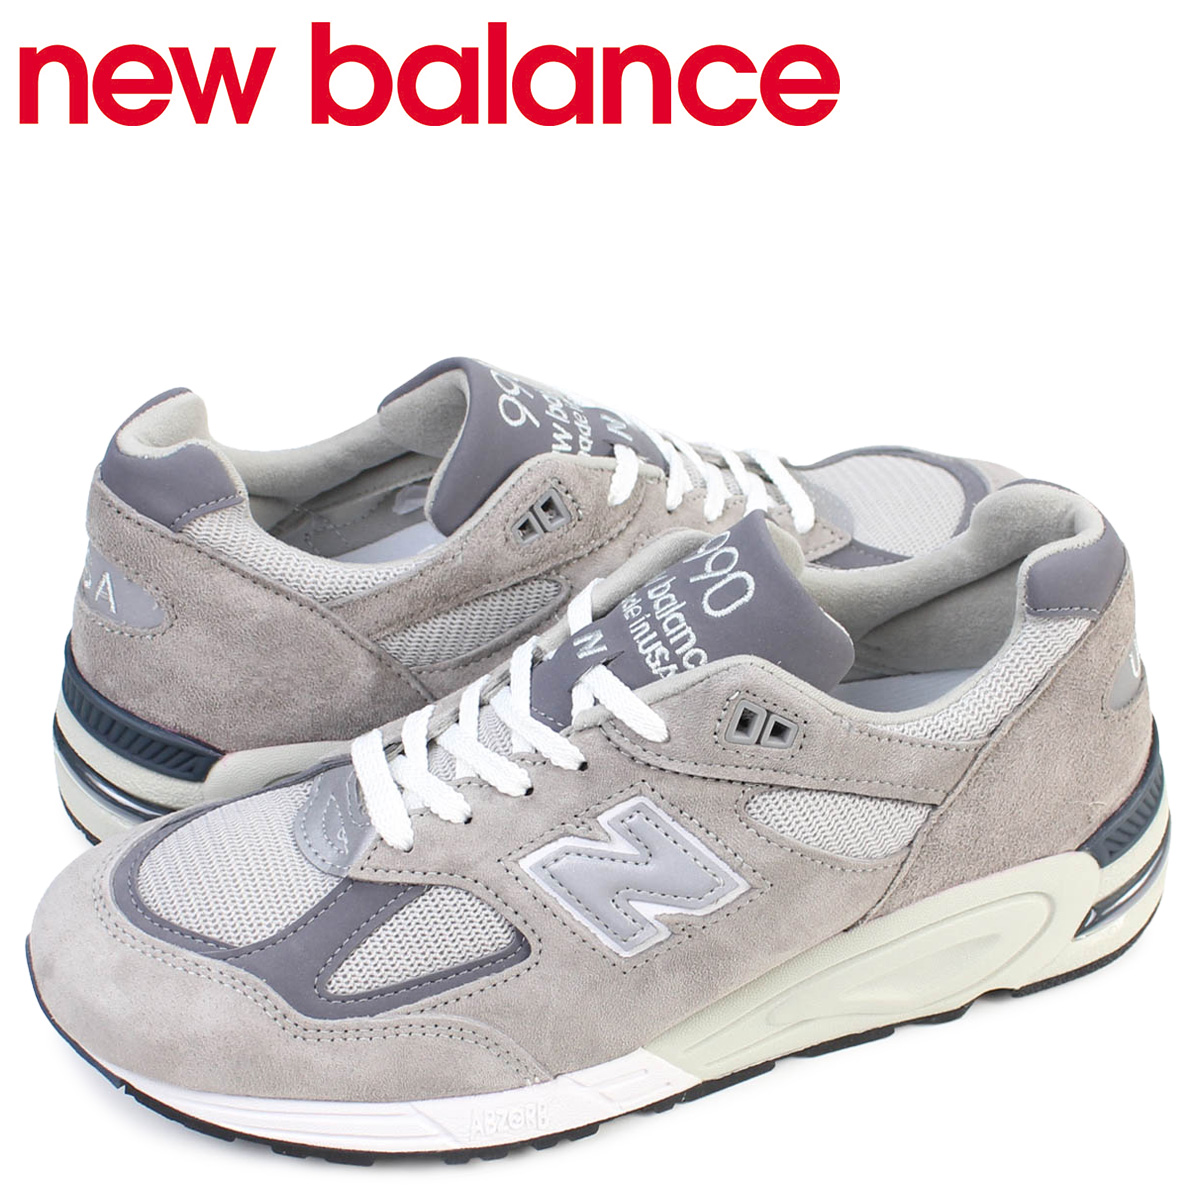 new balance running shoes 990